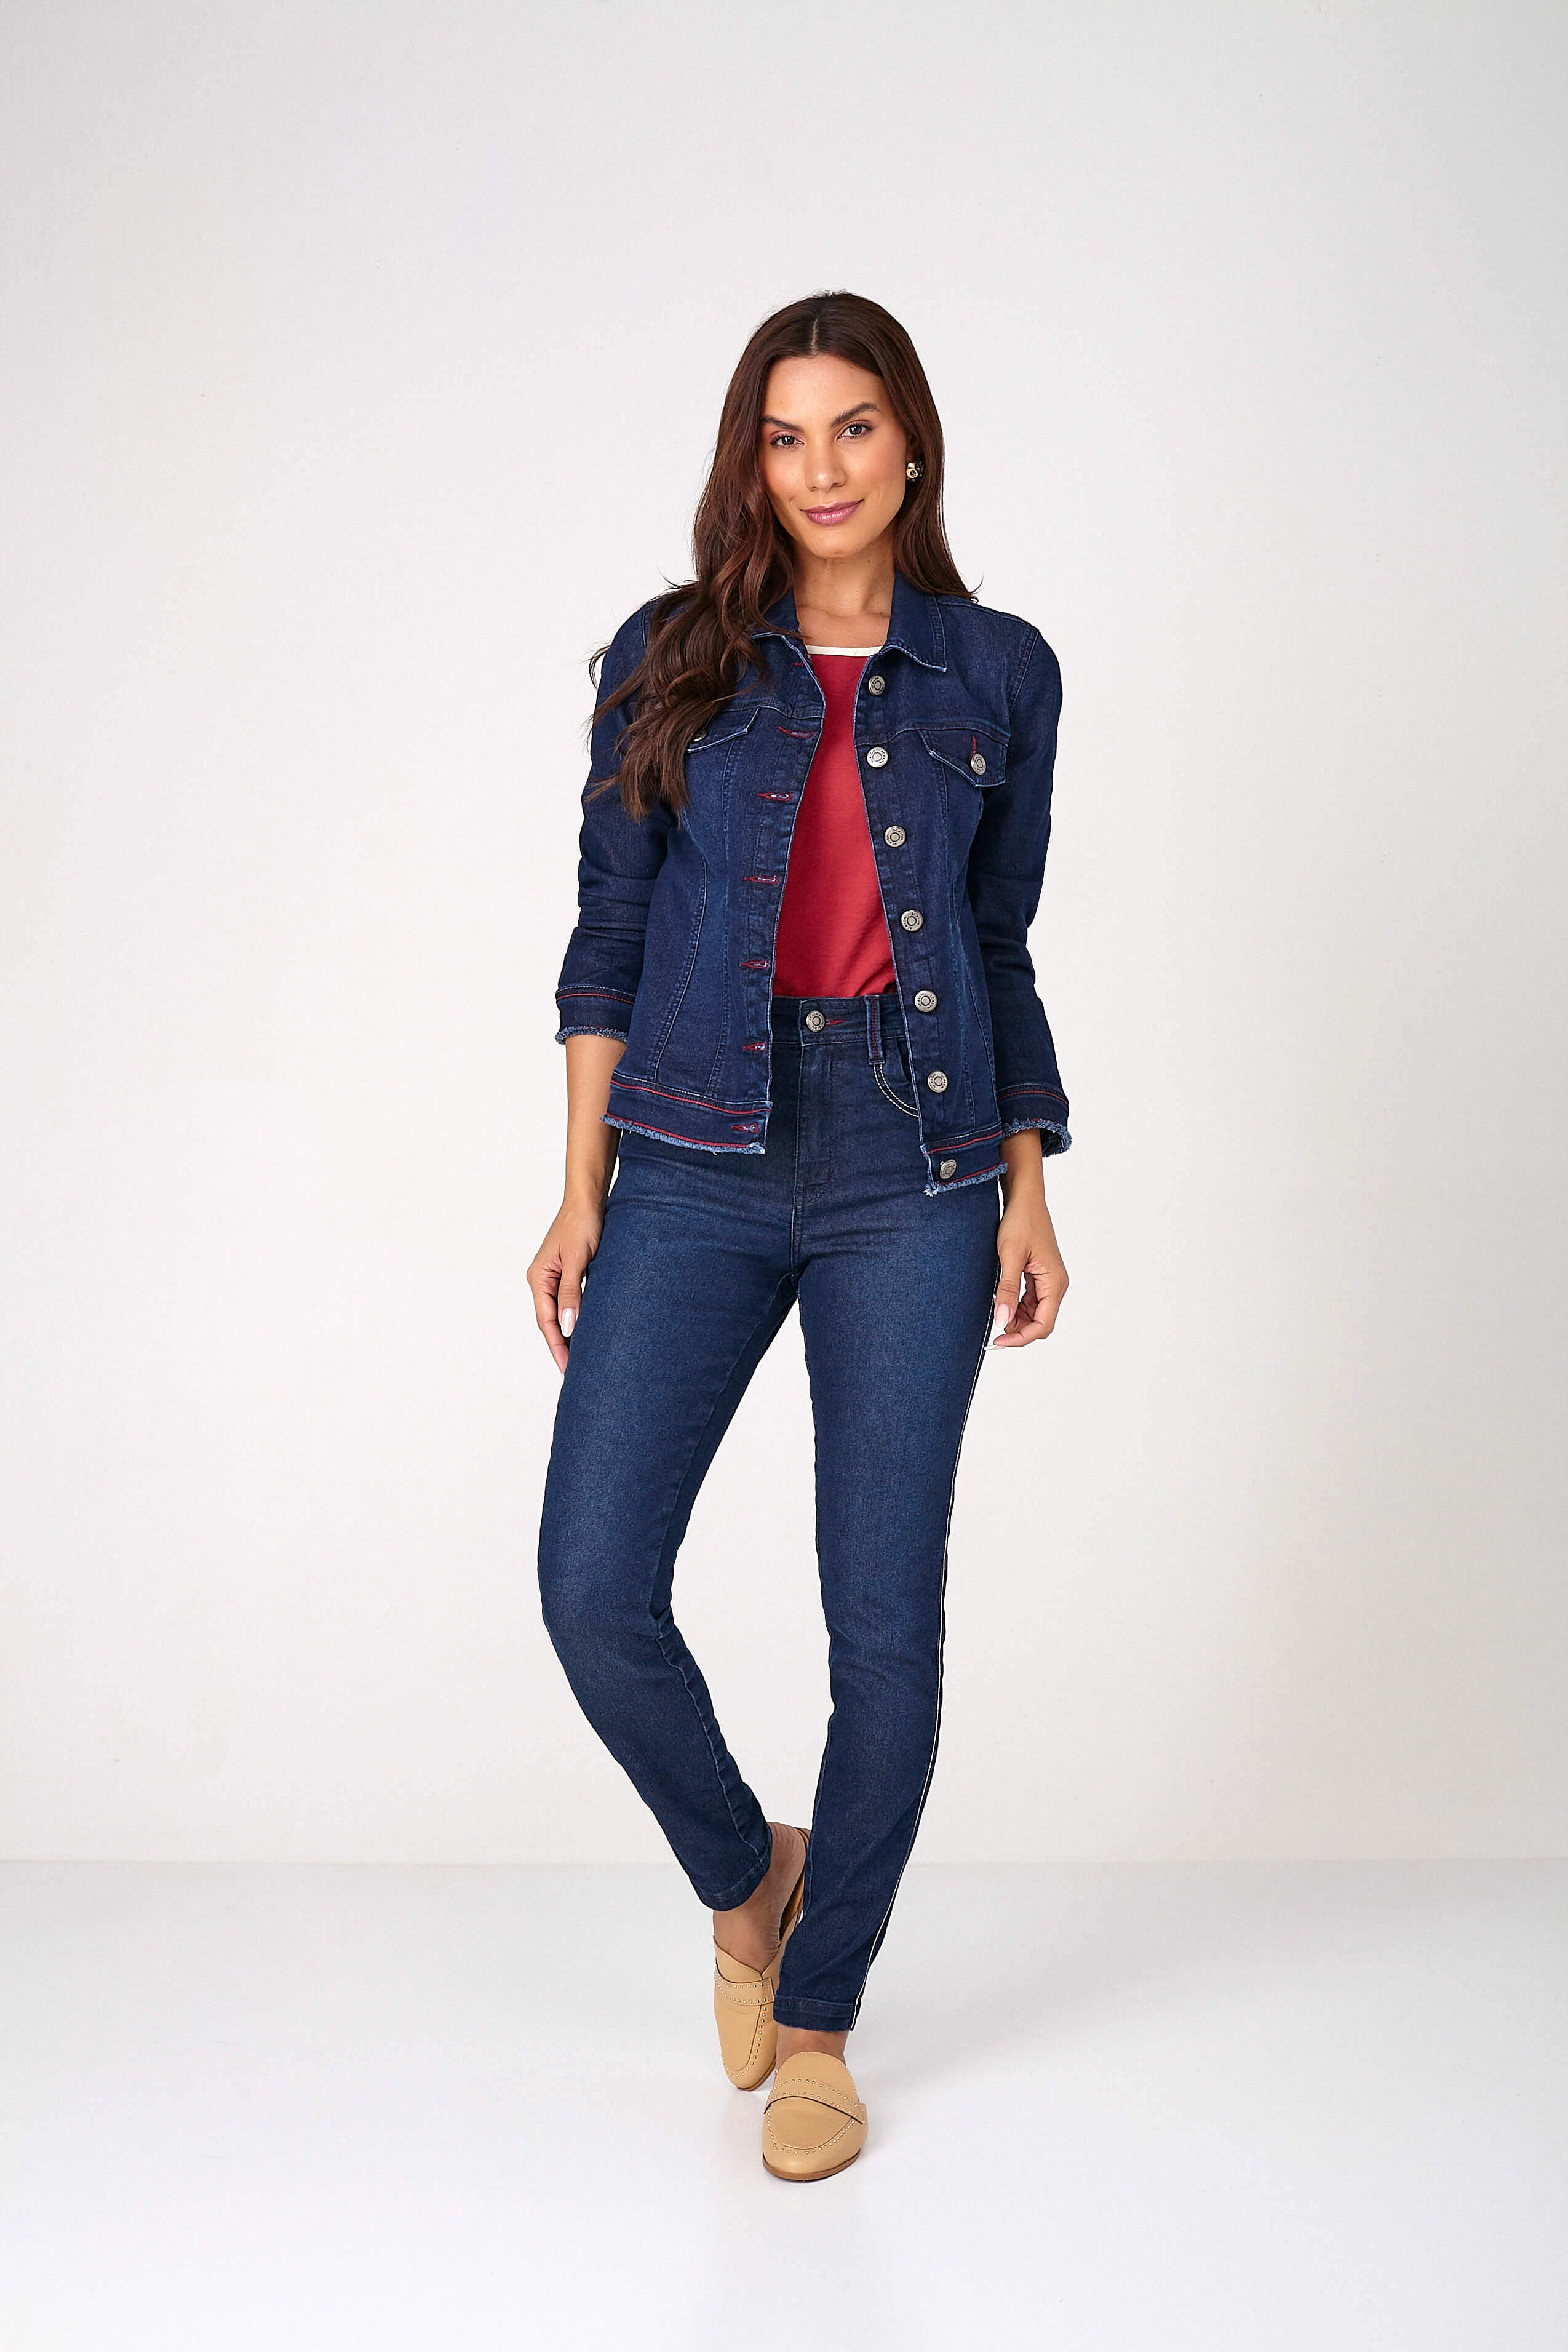 jaqueta jeans tradicional navy – Scalon